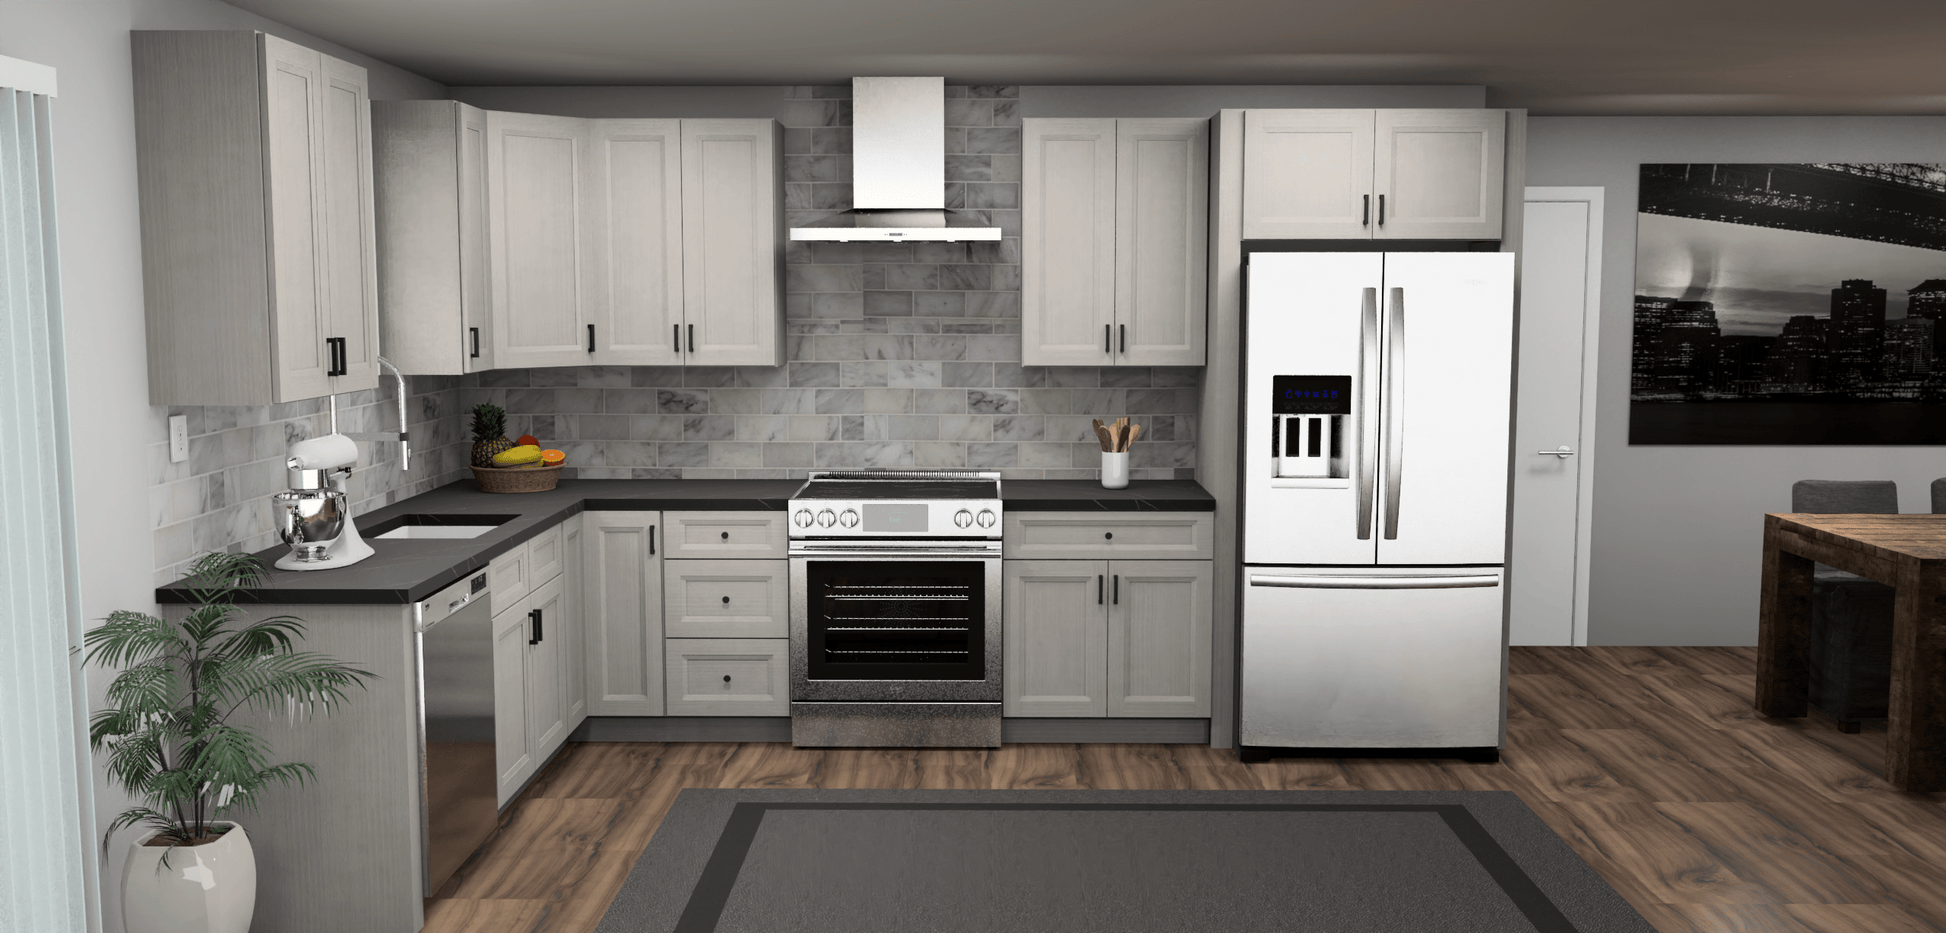 Fabuwood Allure Onyx Horizon 8 x 13 L Shaped Kitchen Front Layout Photo